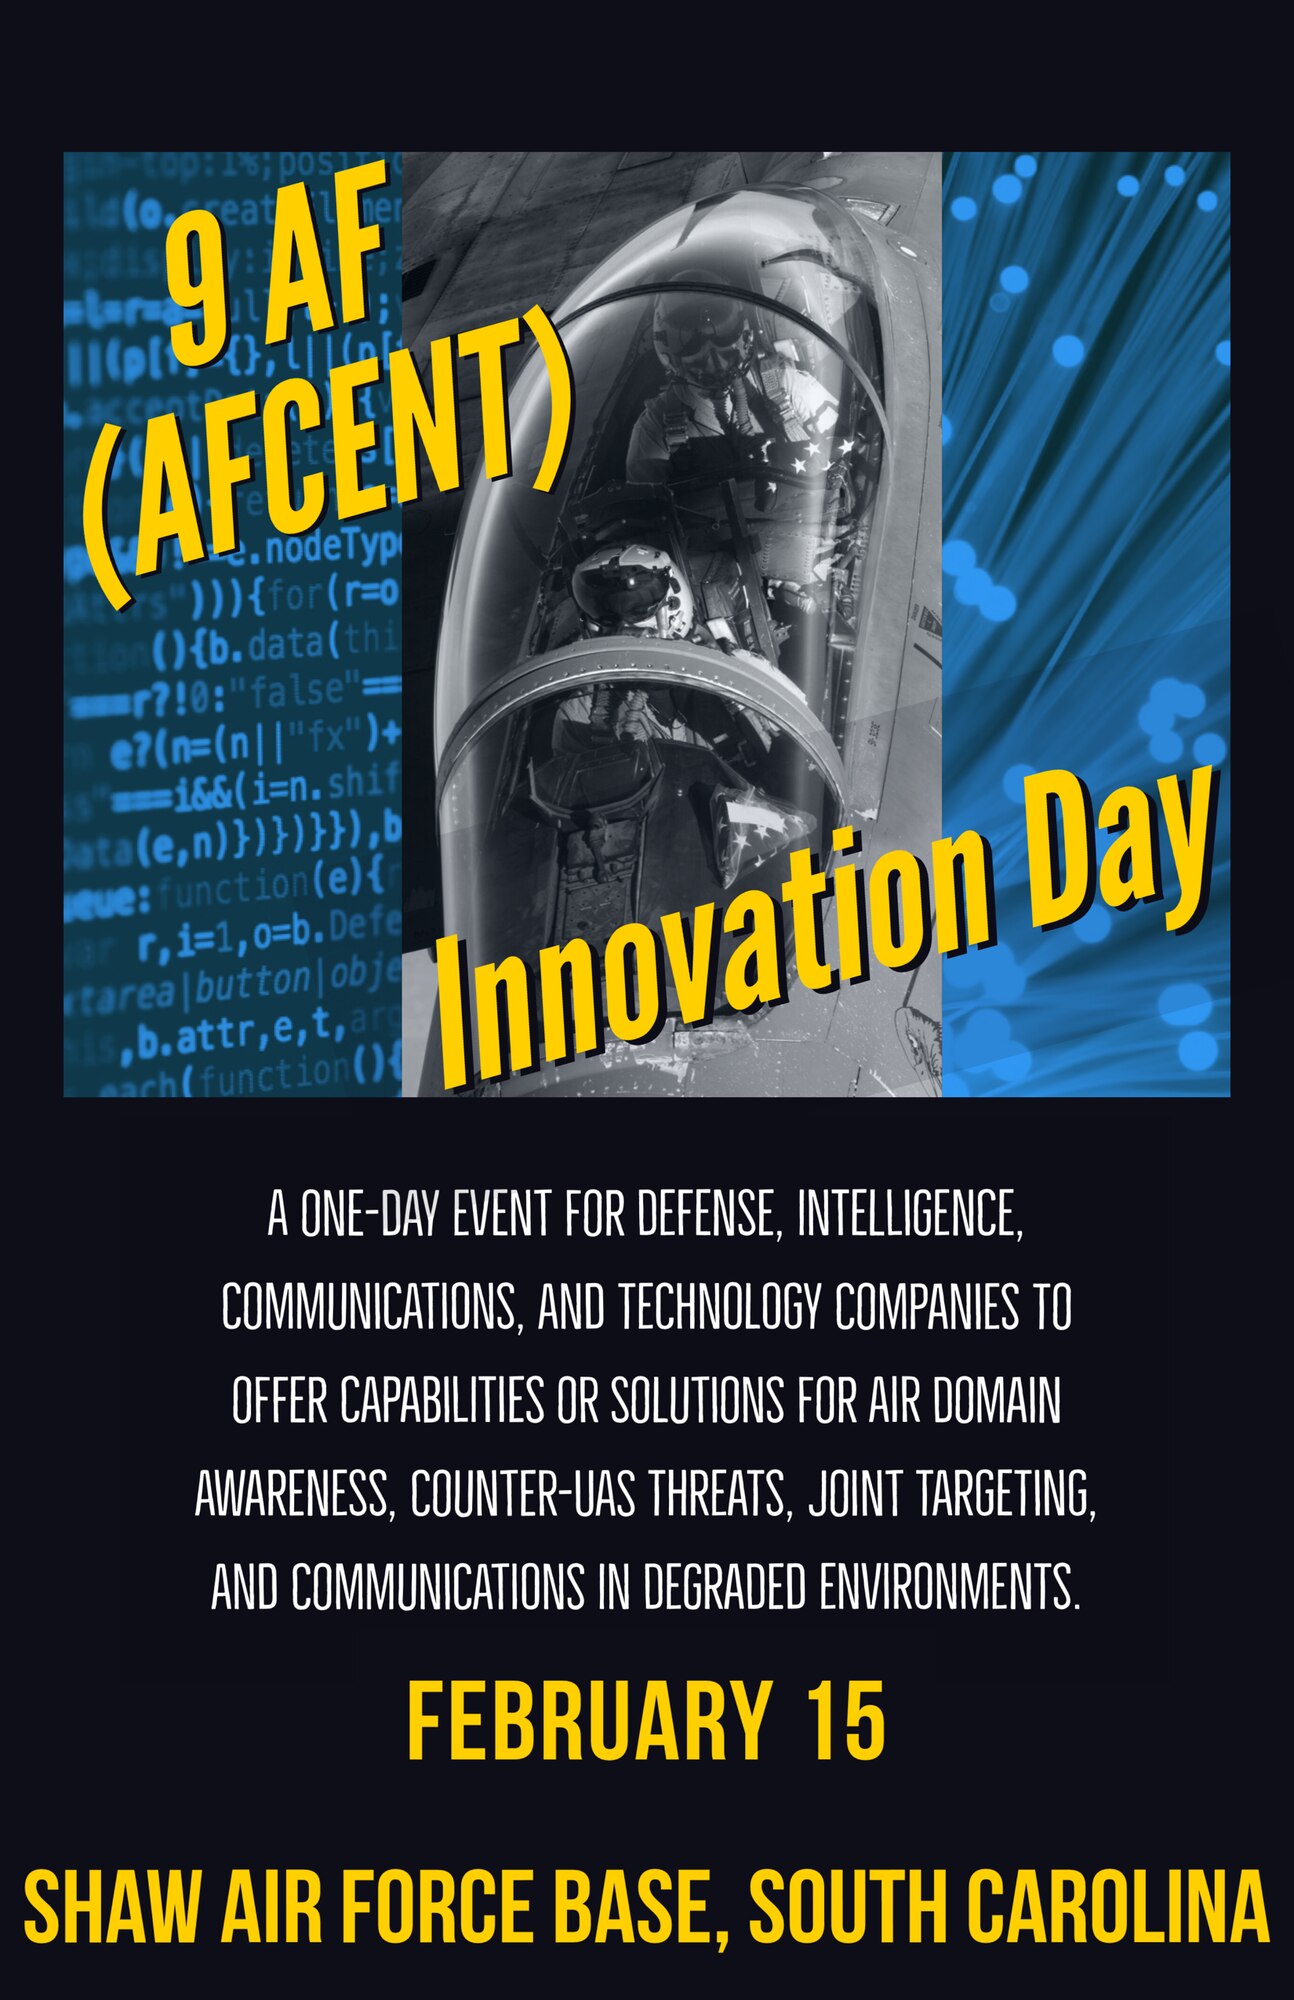 AFCENT Innovation Day